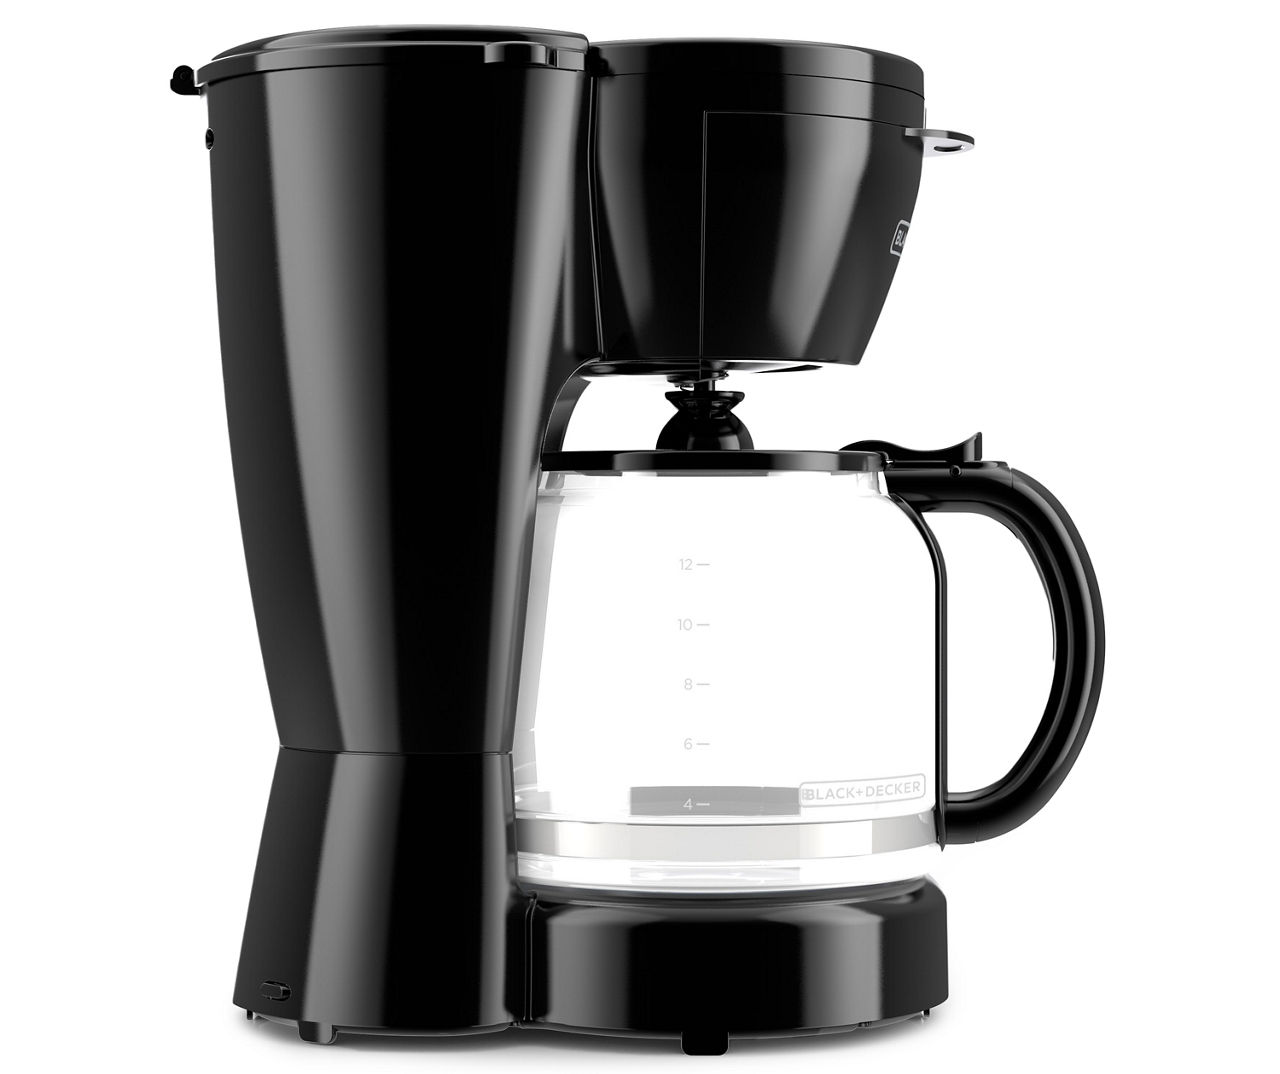 Black + Decker Black 12-Cup* Coffee Maker